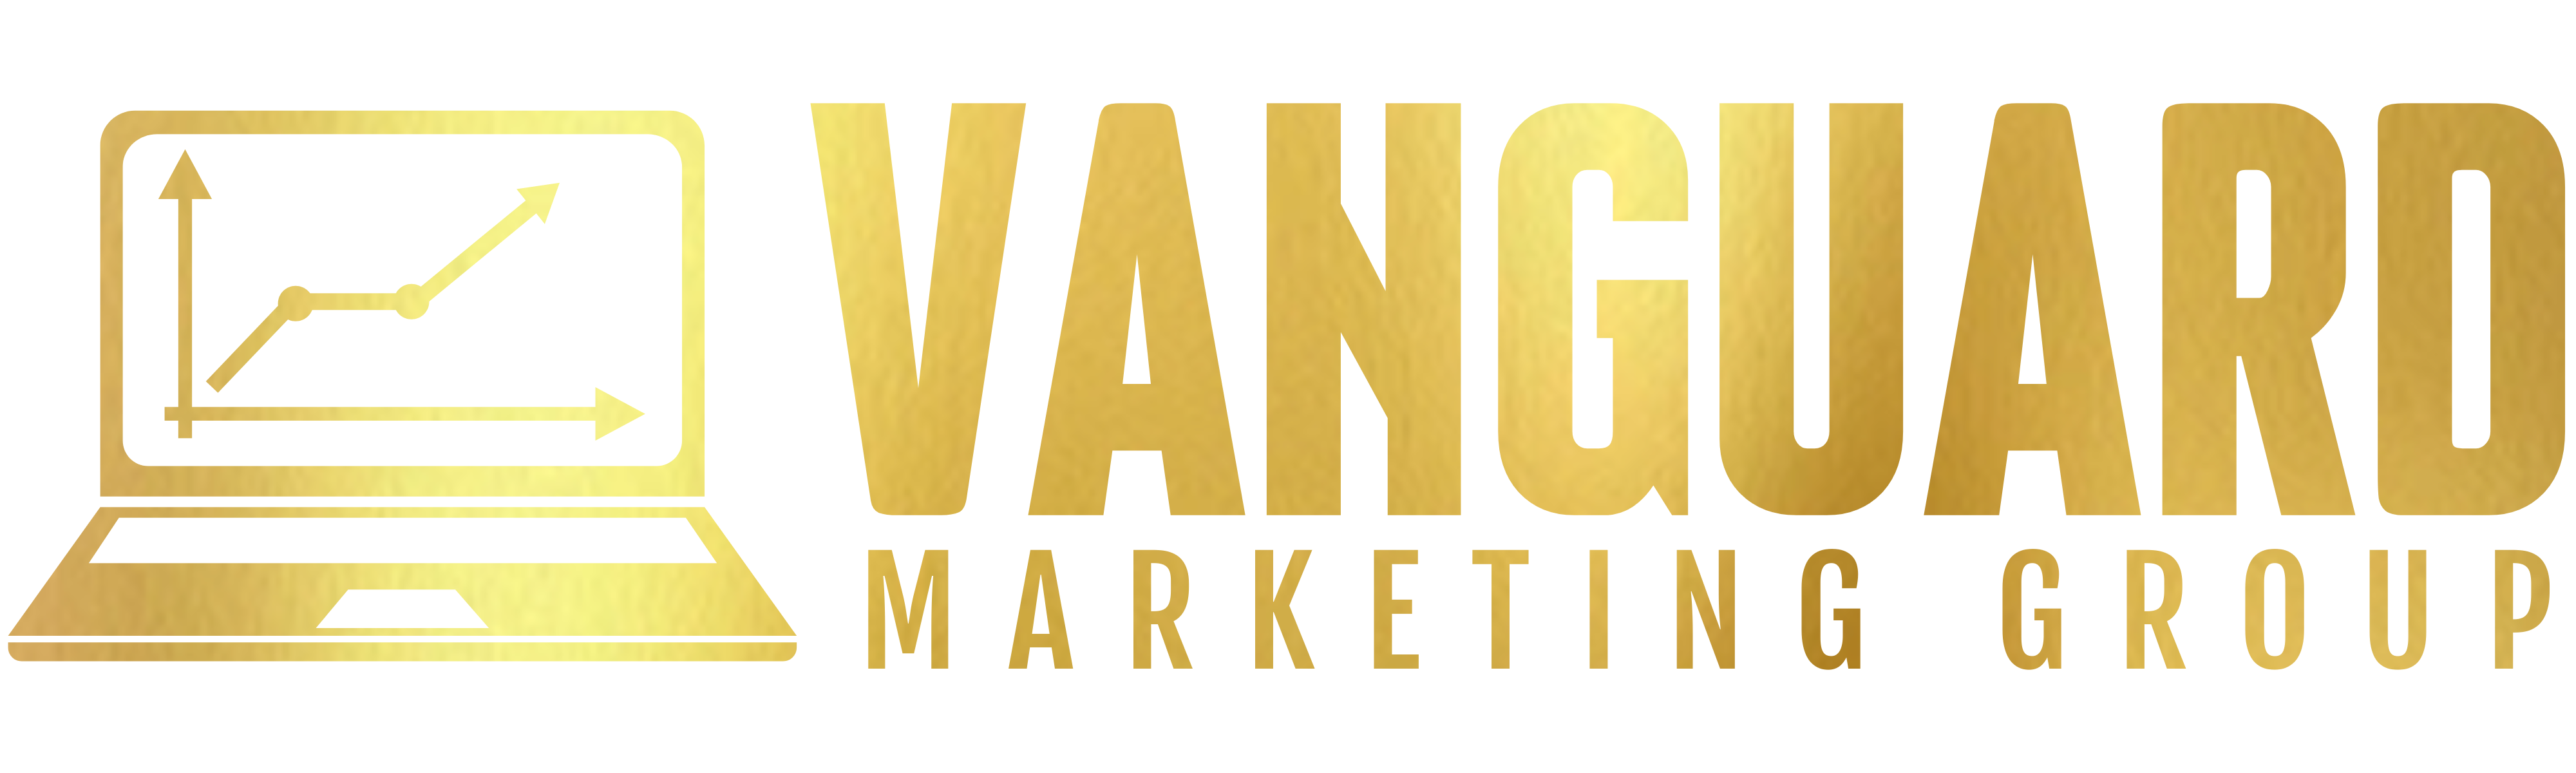 Vanguard Marketing Group, Vanguard, Vanguard Marketing